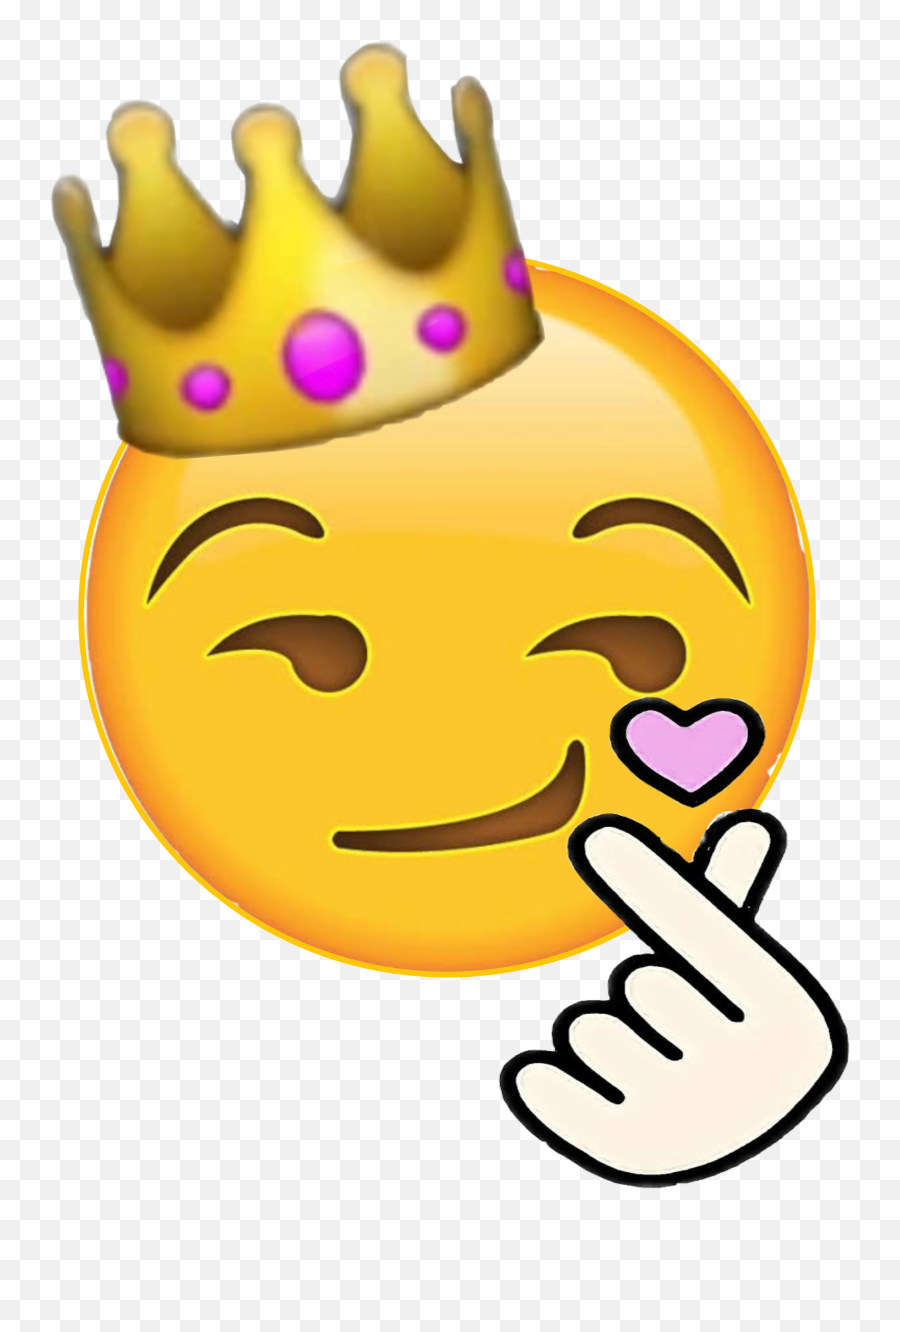 Emotions Emoji Emoticon Meme Freetoedit - King Emoji Transparent,Emoticon Meme